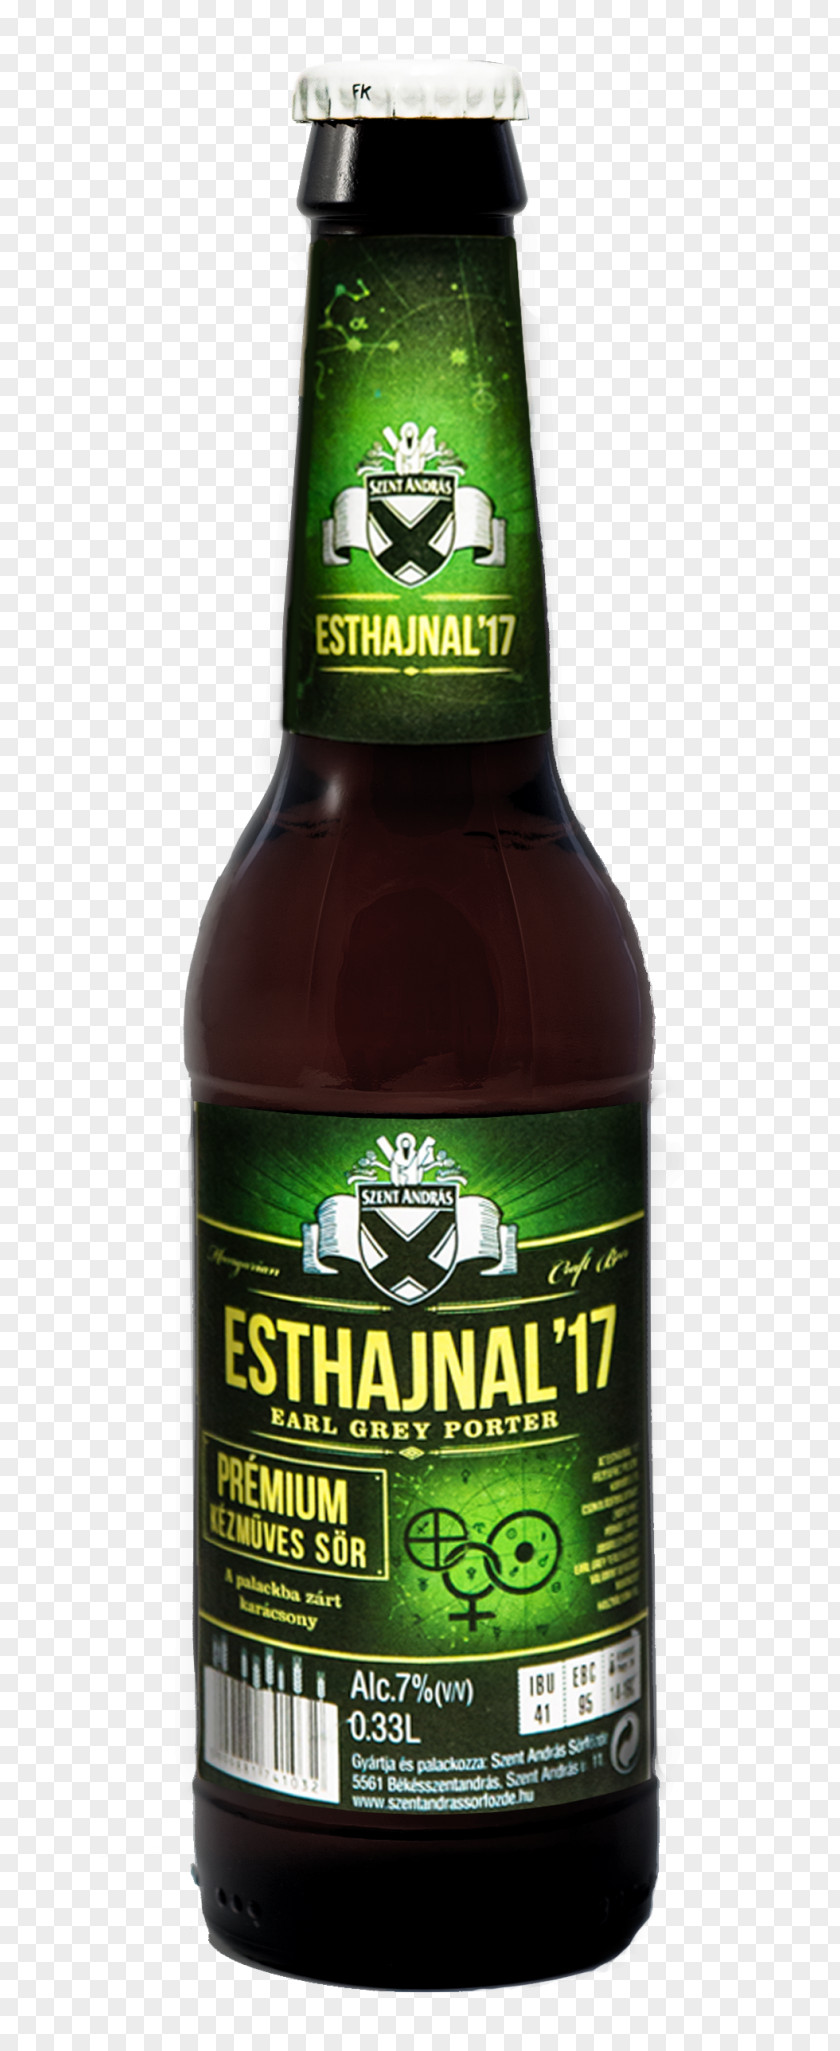 Beer Bottle Brewery Esthajnal Street Porter PNG